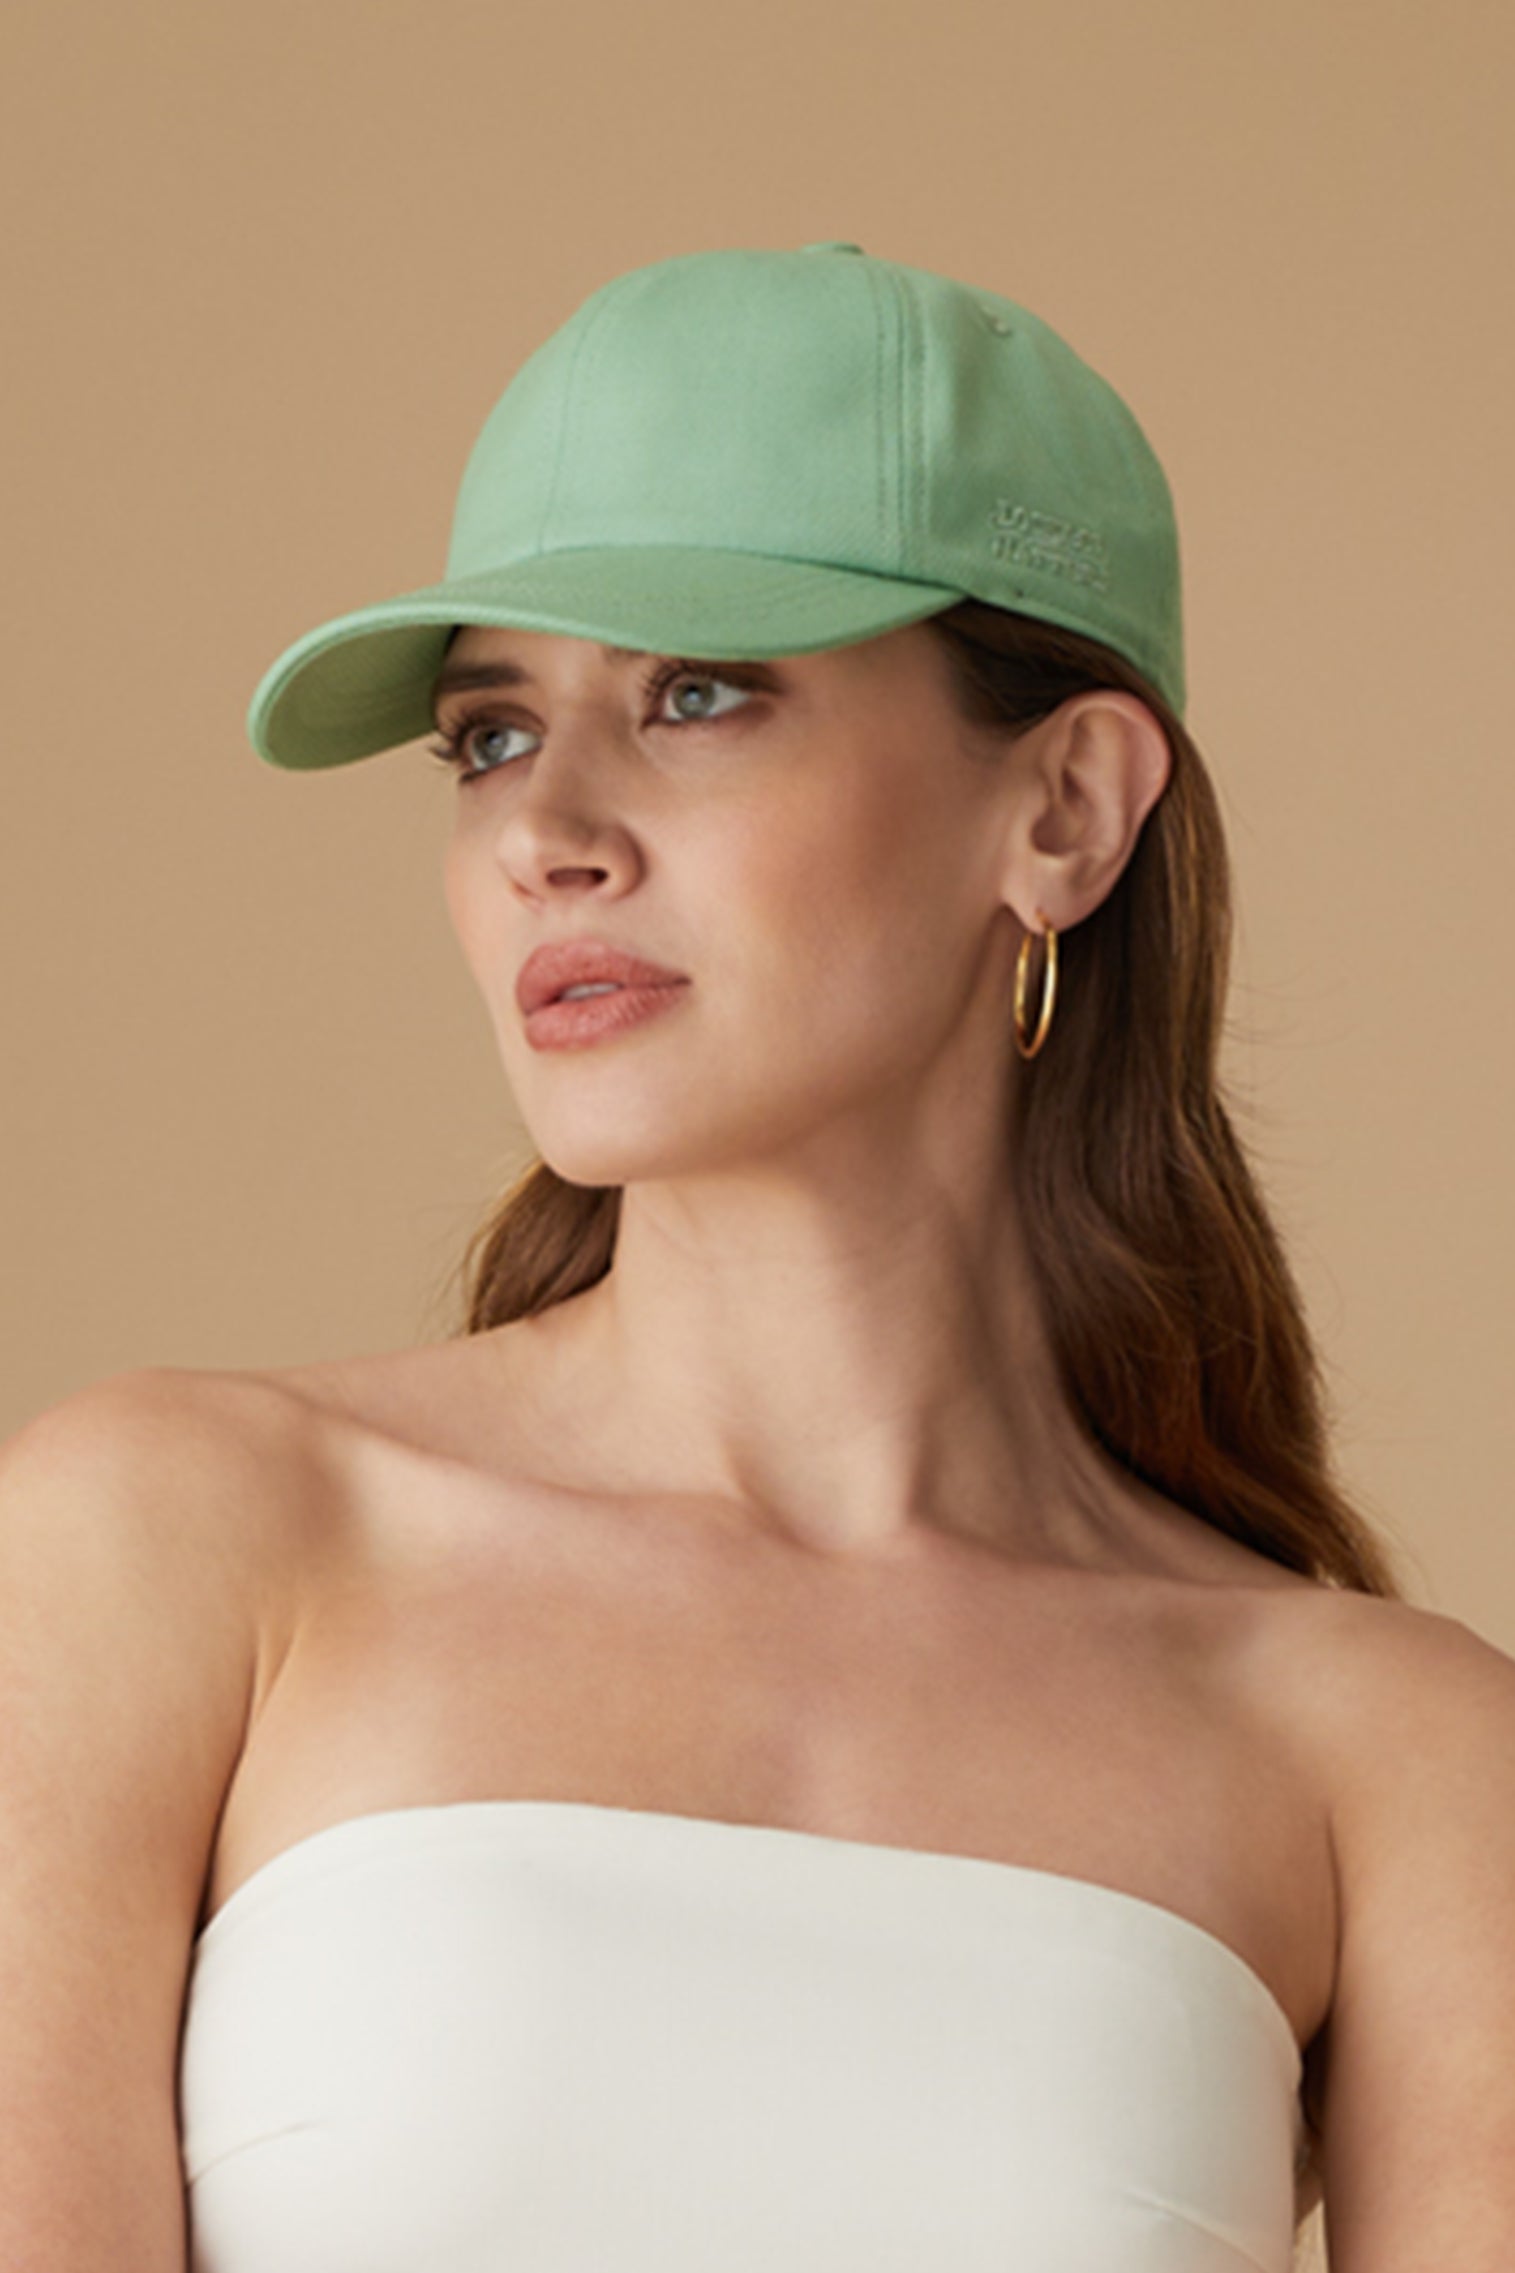 Adjustable Green Baseball Cap - Women's Caps - Lock & Co. Hatters London UK